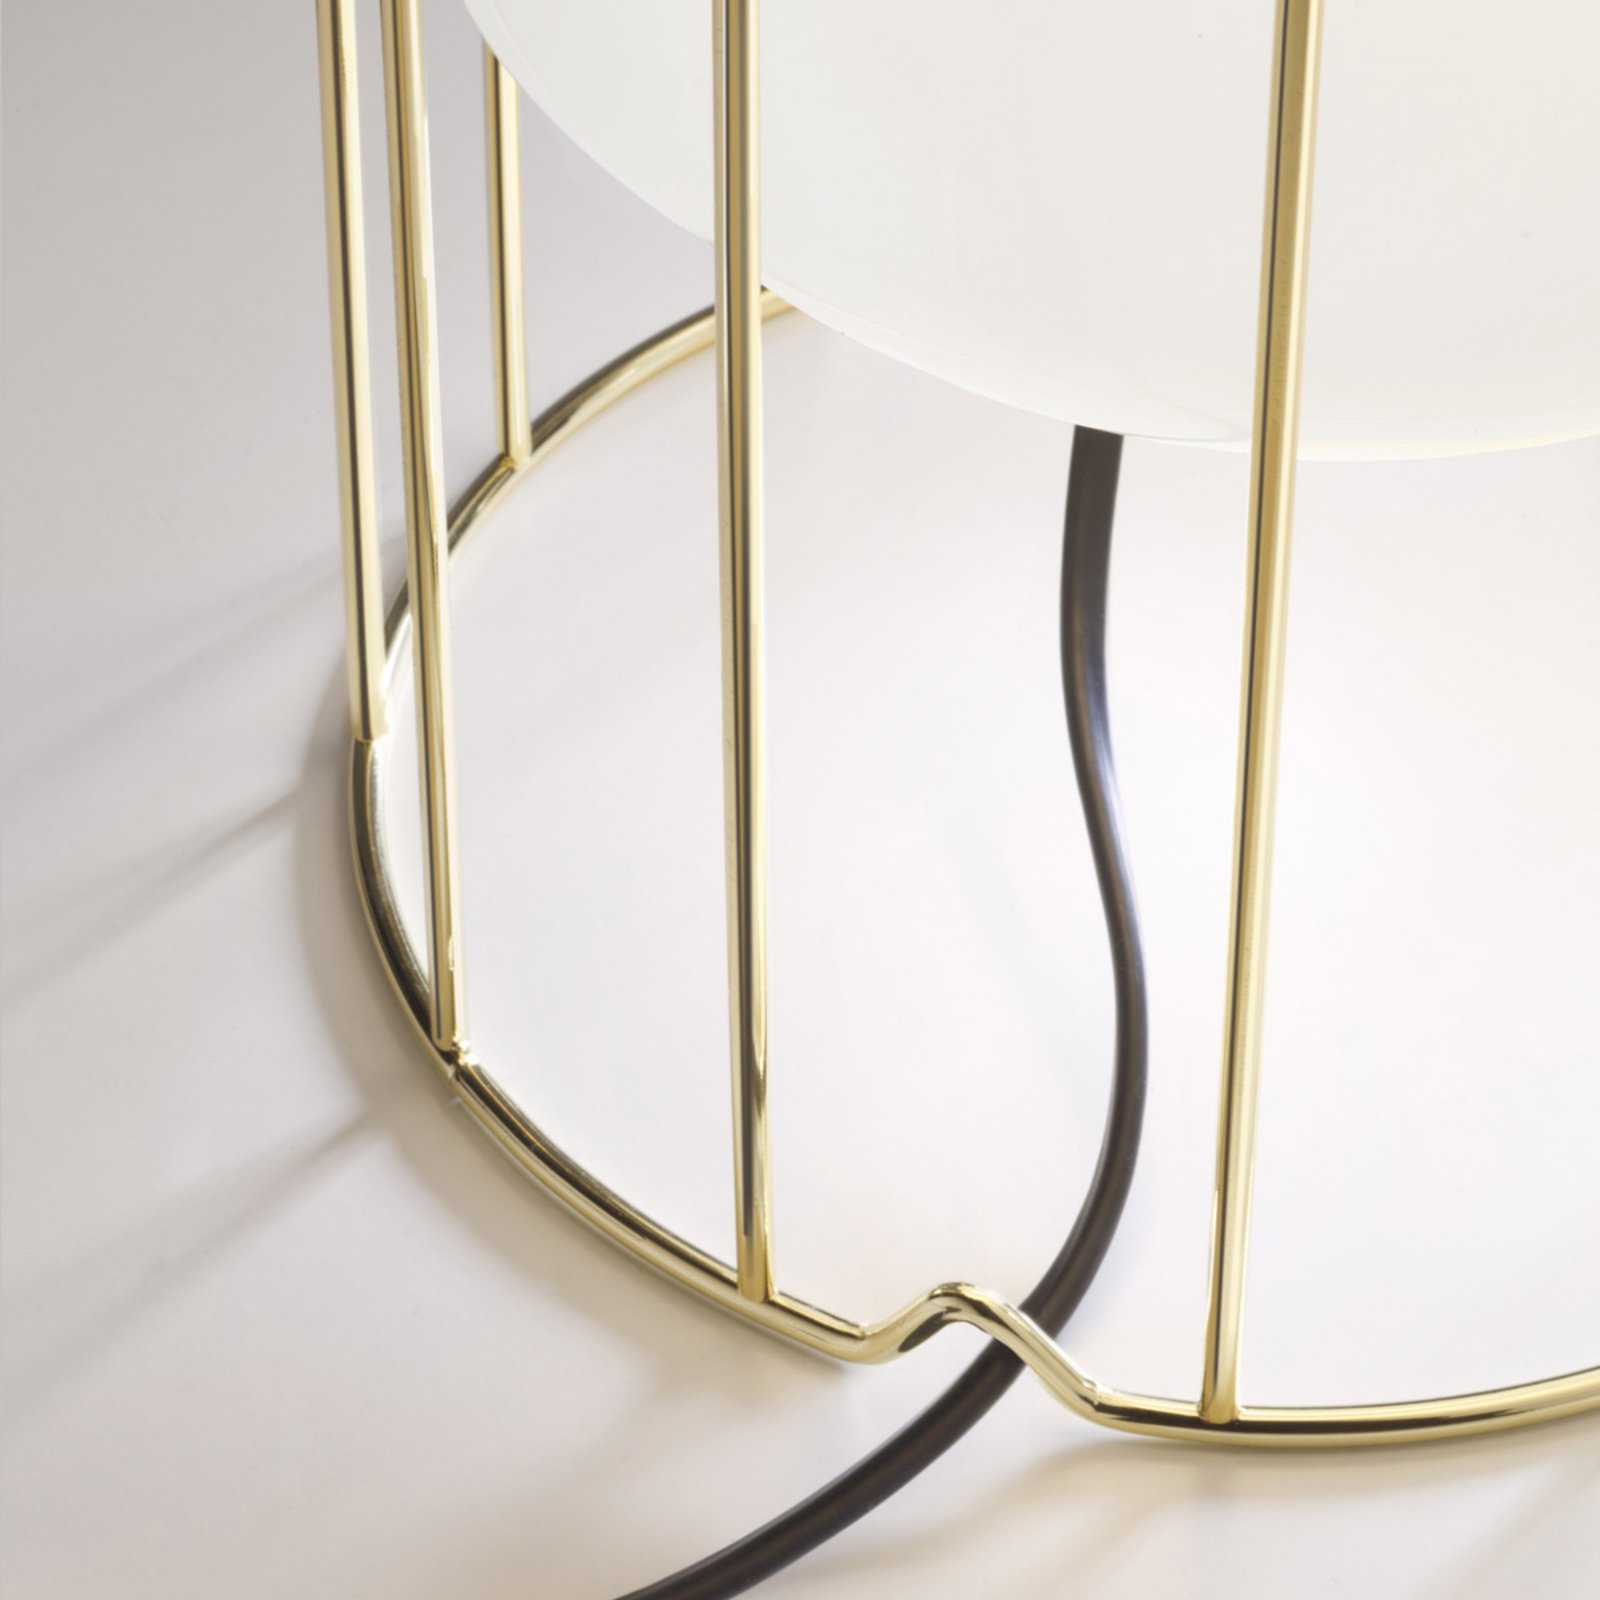 Lampada da tavolo di design Aérostat ottone 23 cm